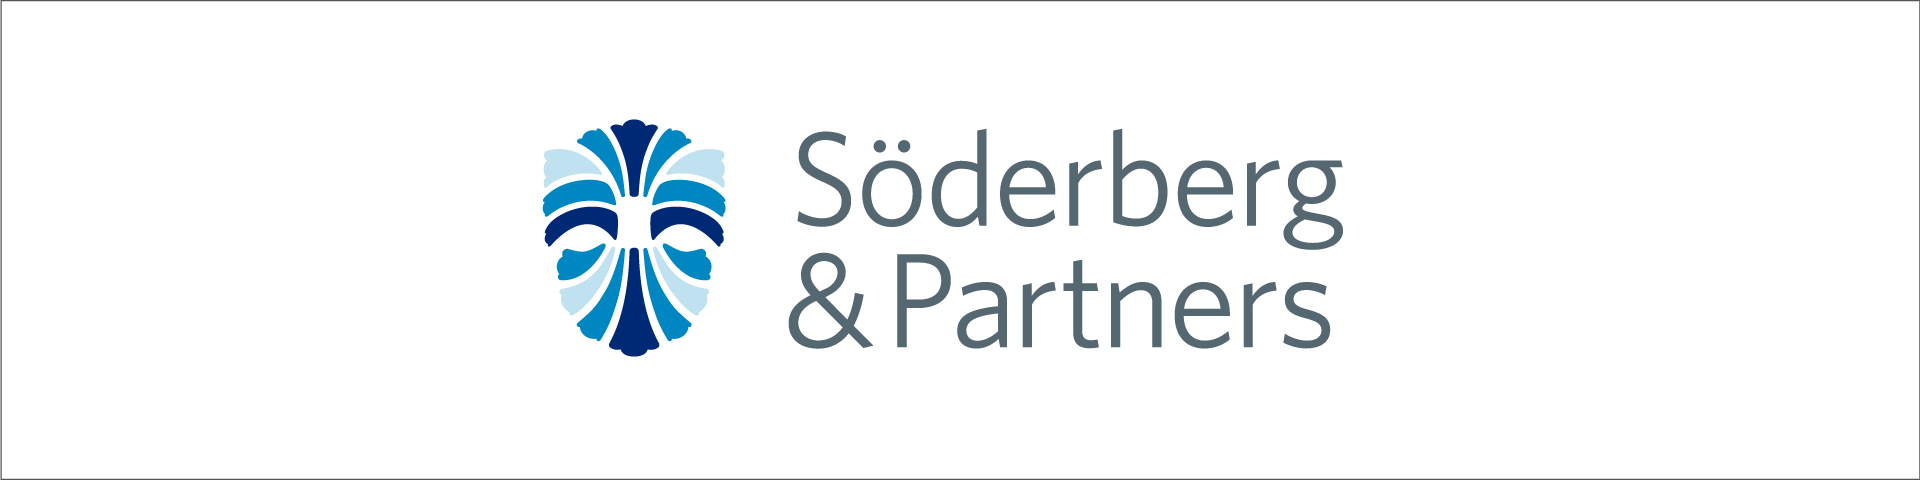 Söderberg & Partners Borås